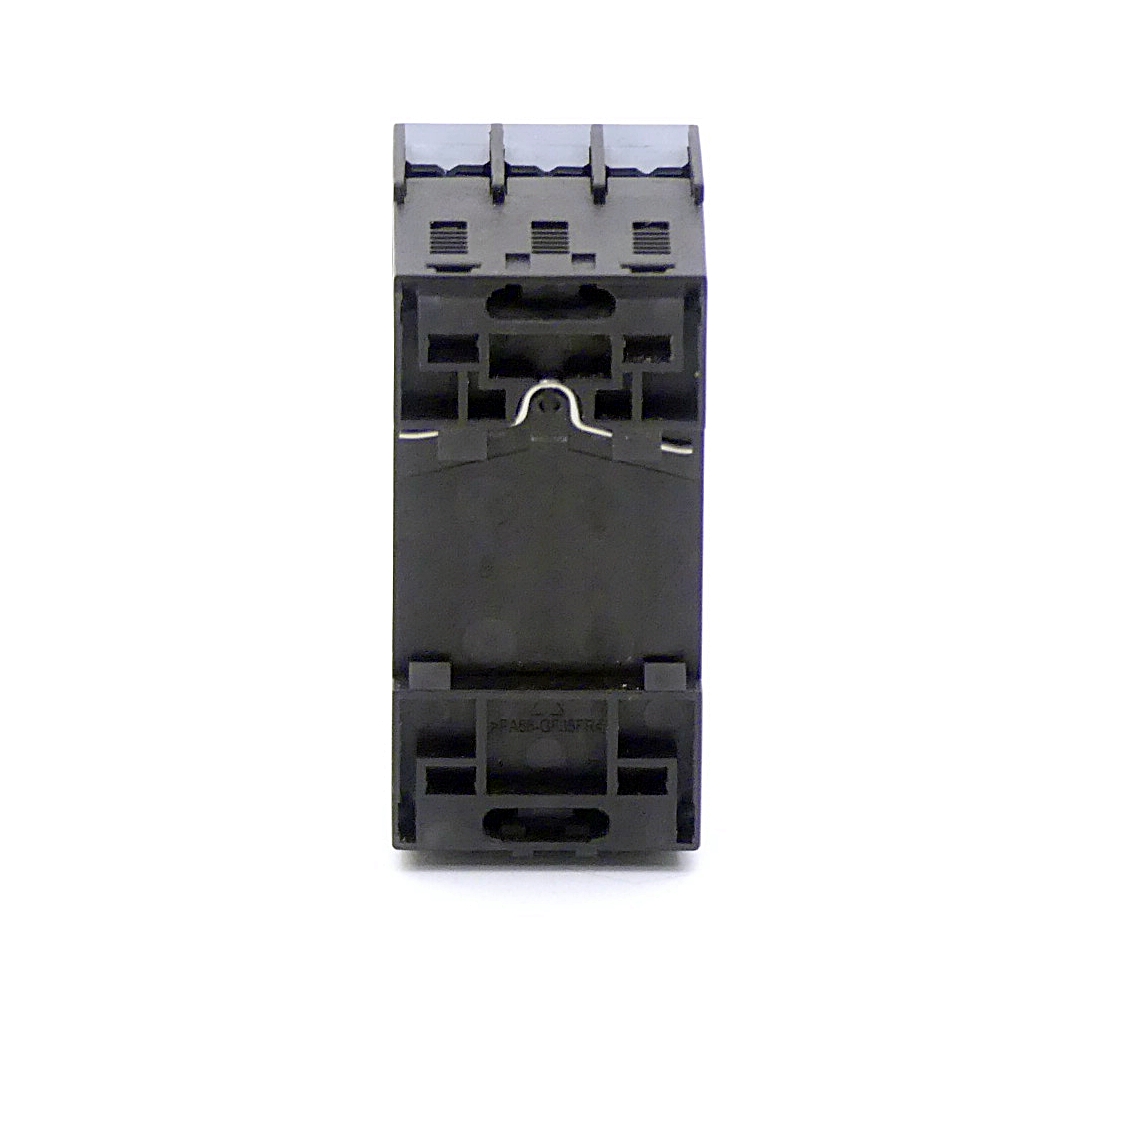 Circuit breaker 3RV2021-4DA15 